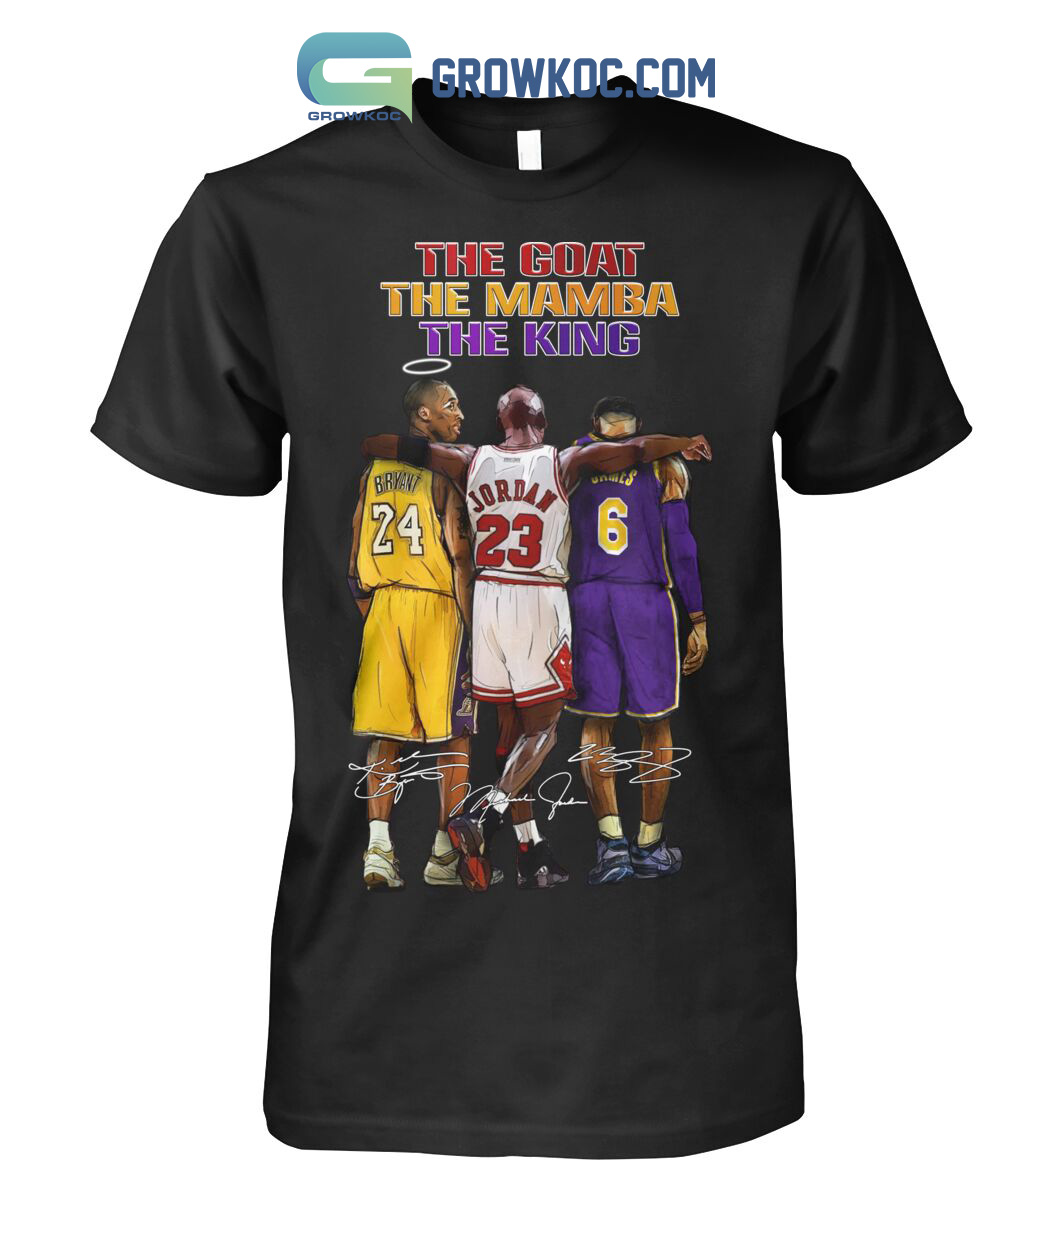 The Goat The Mamba The King Kobe Bryant Michael Jordan Lebron James T-Shirt